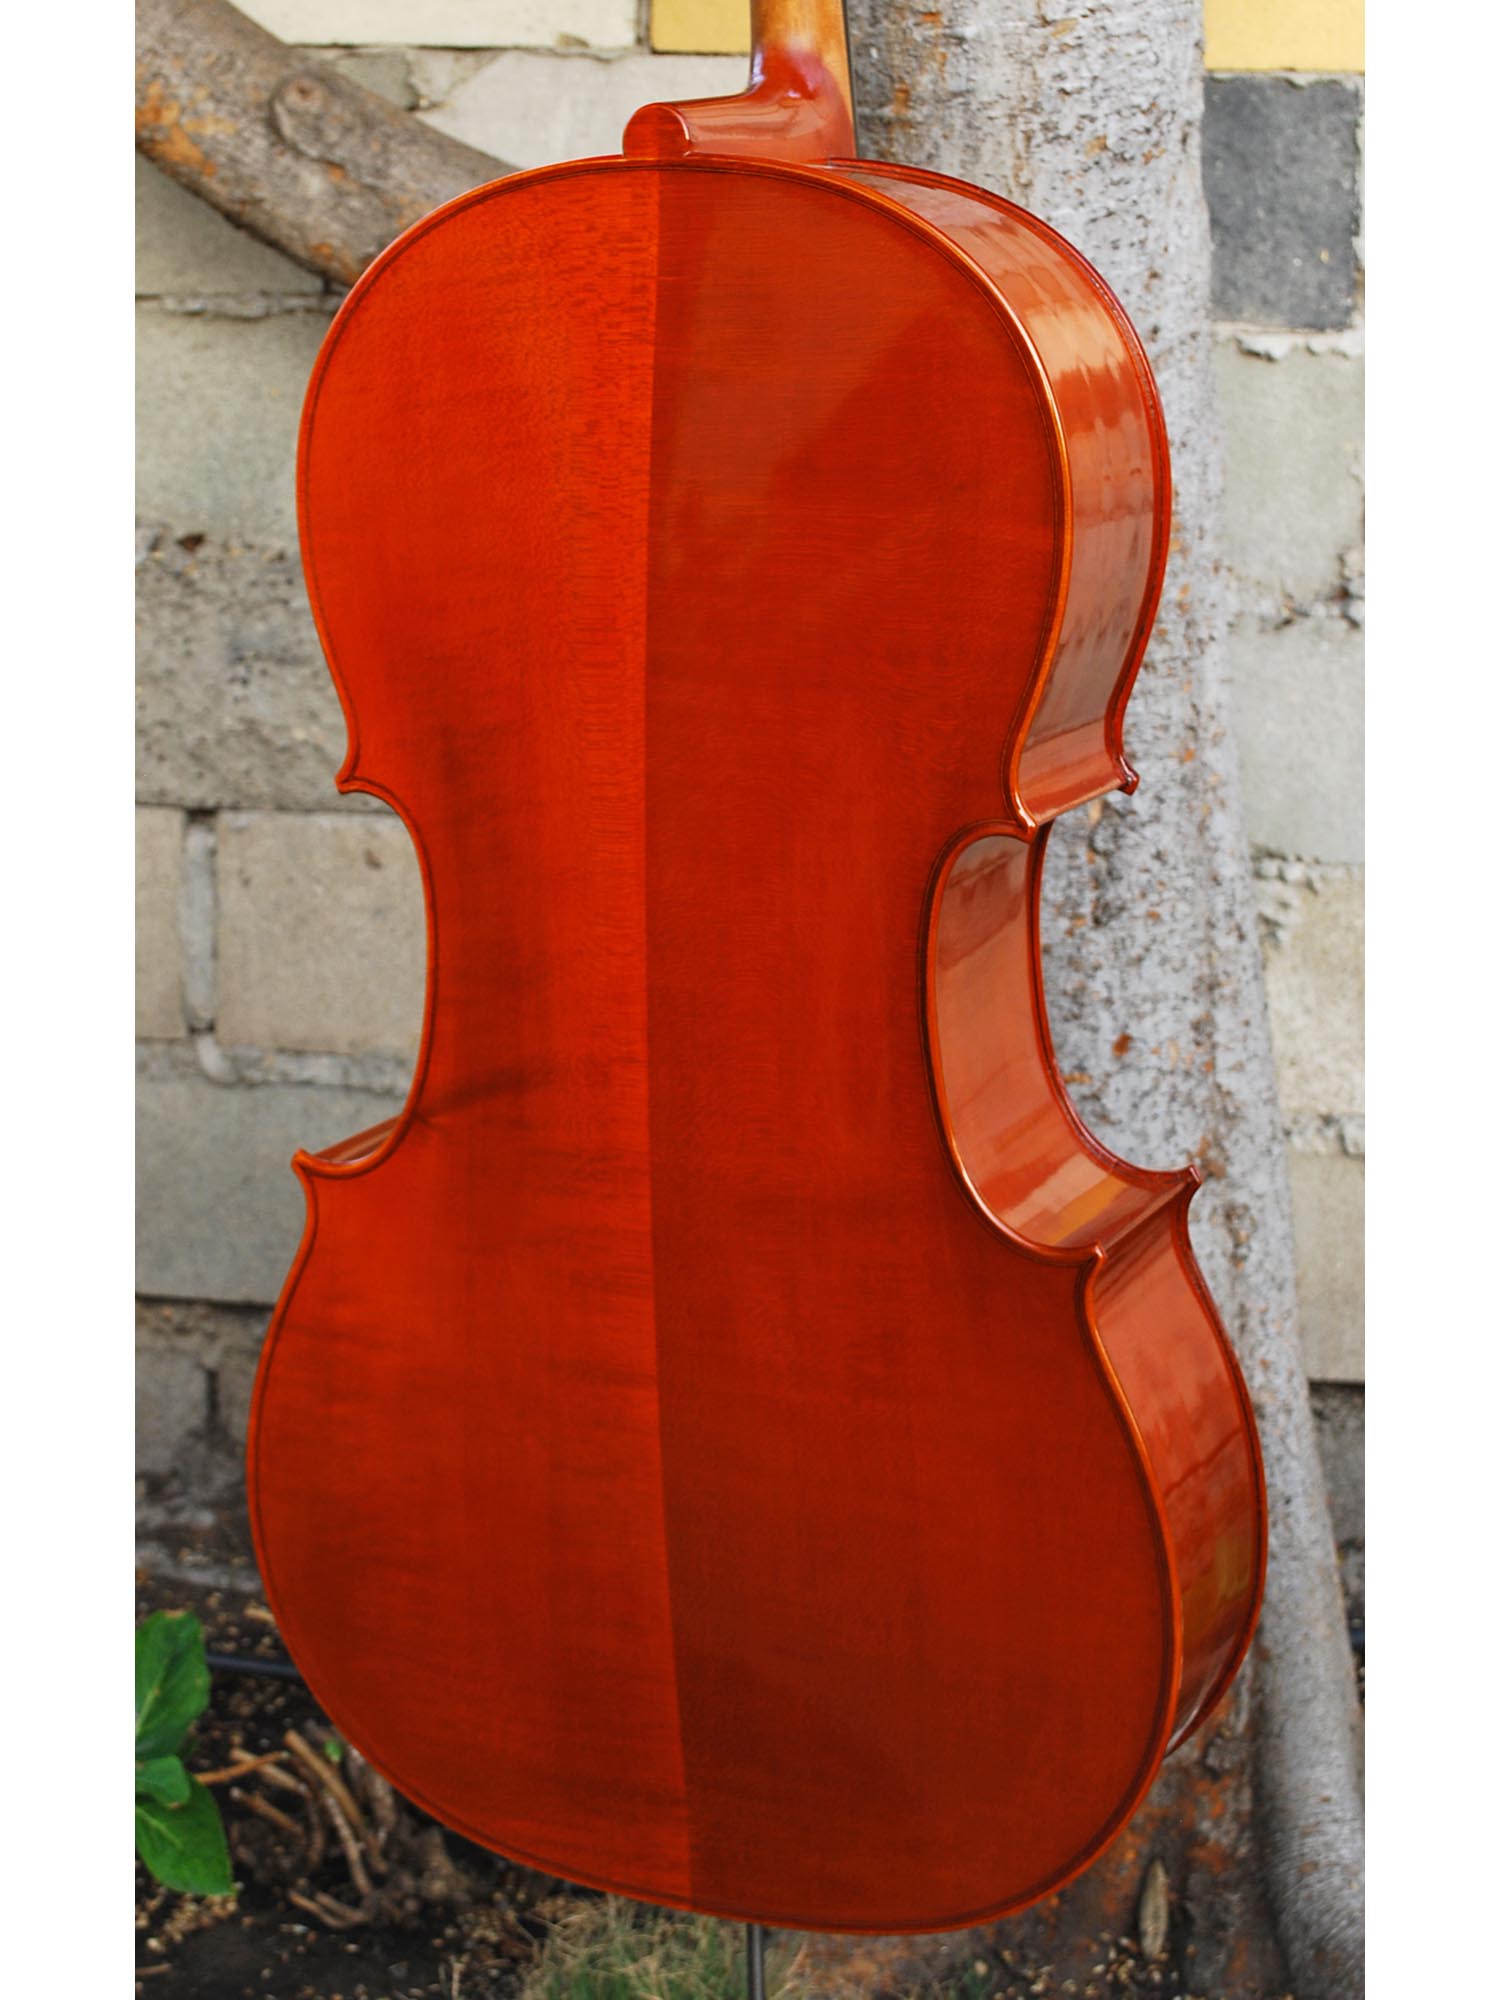 Angel Taylor model 120 4/4 Cello